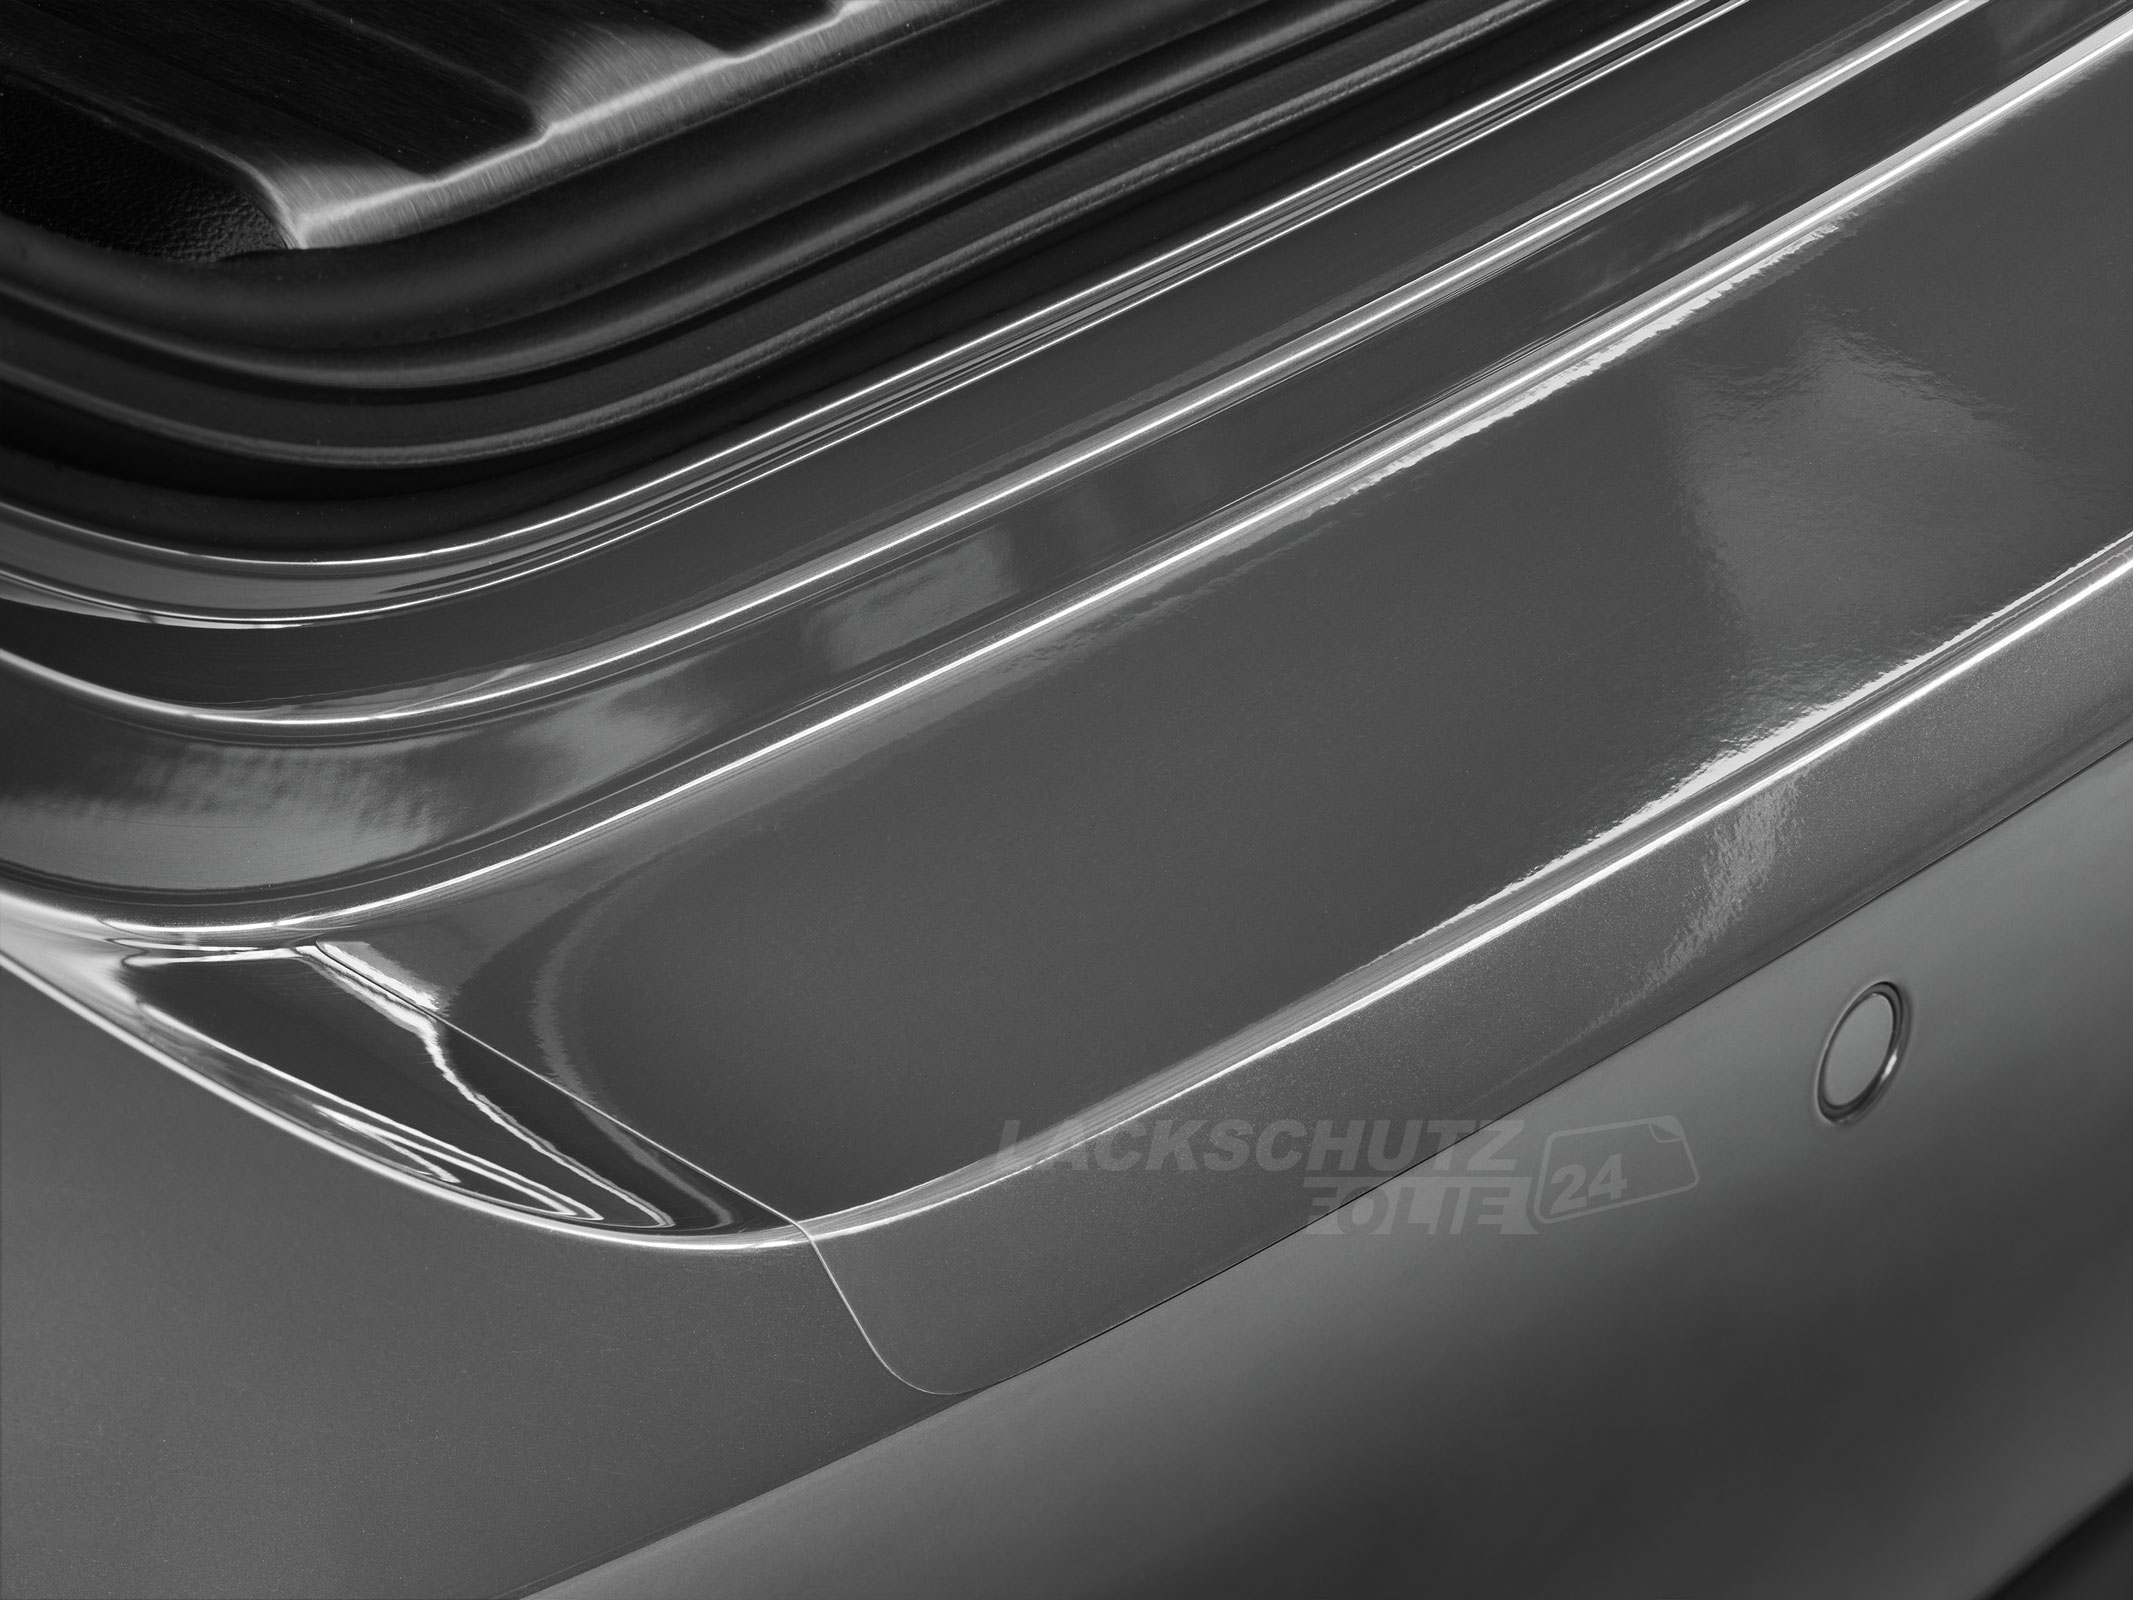 Ladekantenschutzfolie - Transparent Glatt Hochglänzend 240 µm stark für Seat Altea XL BJ 2006-2009